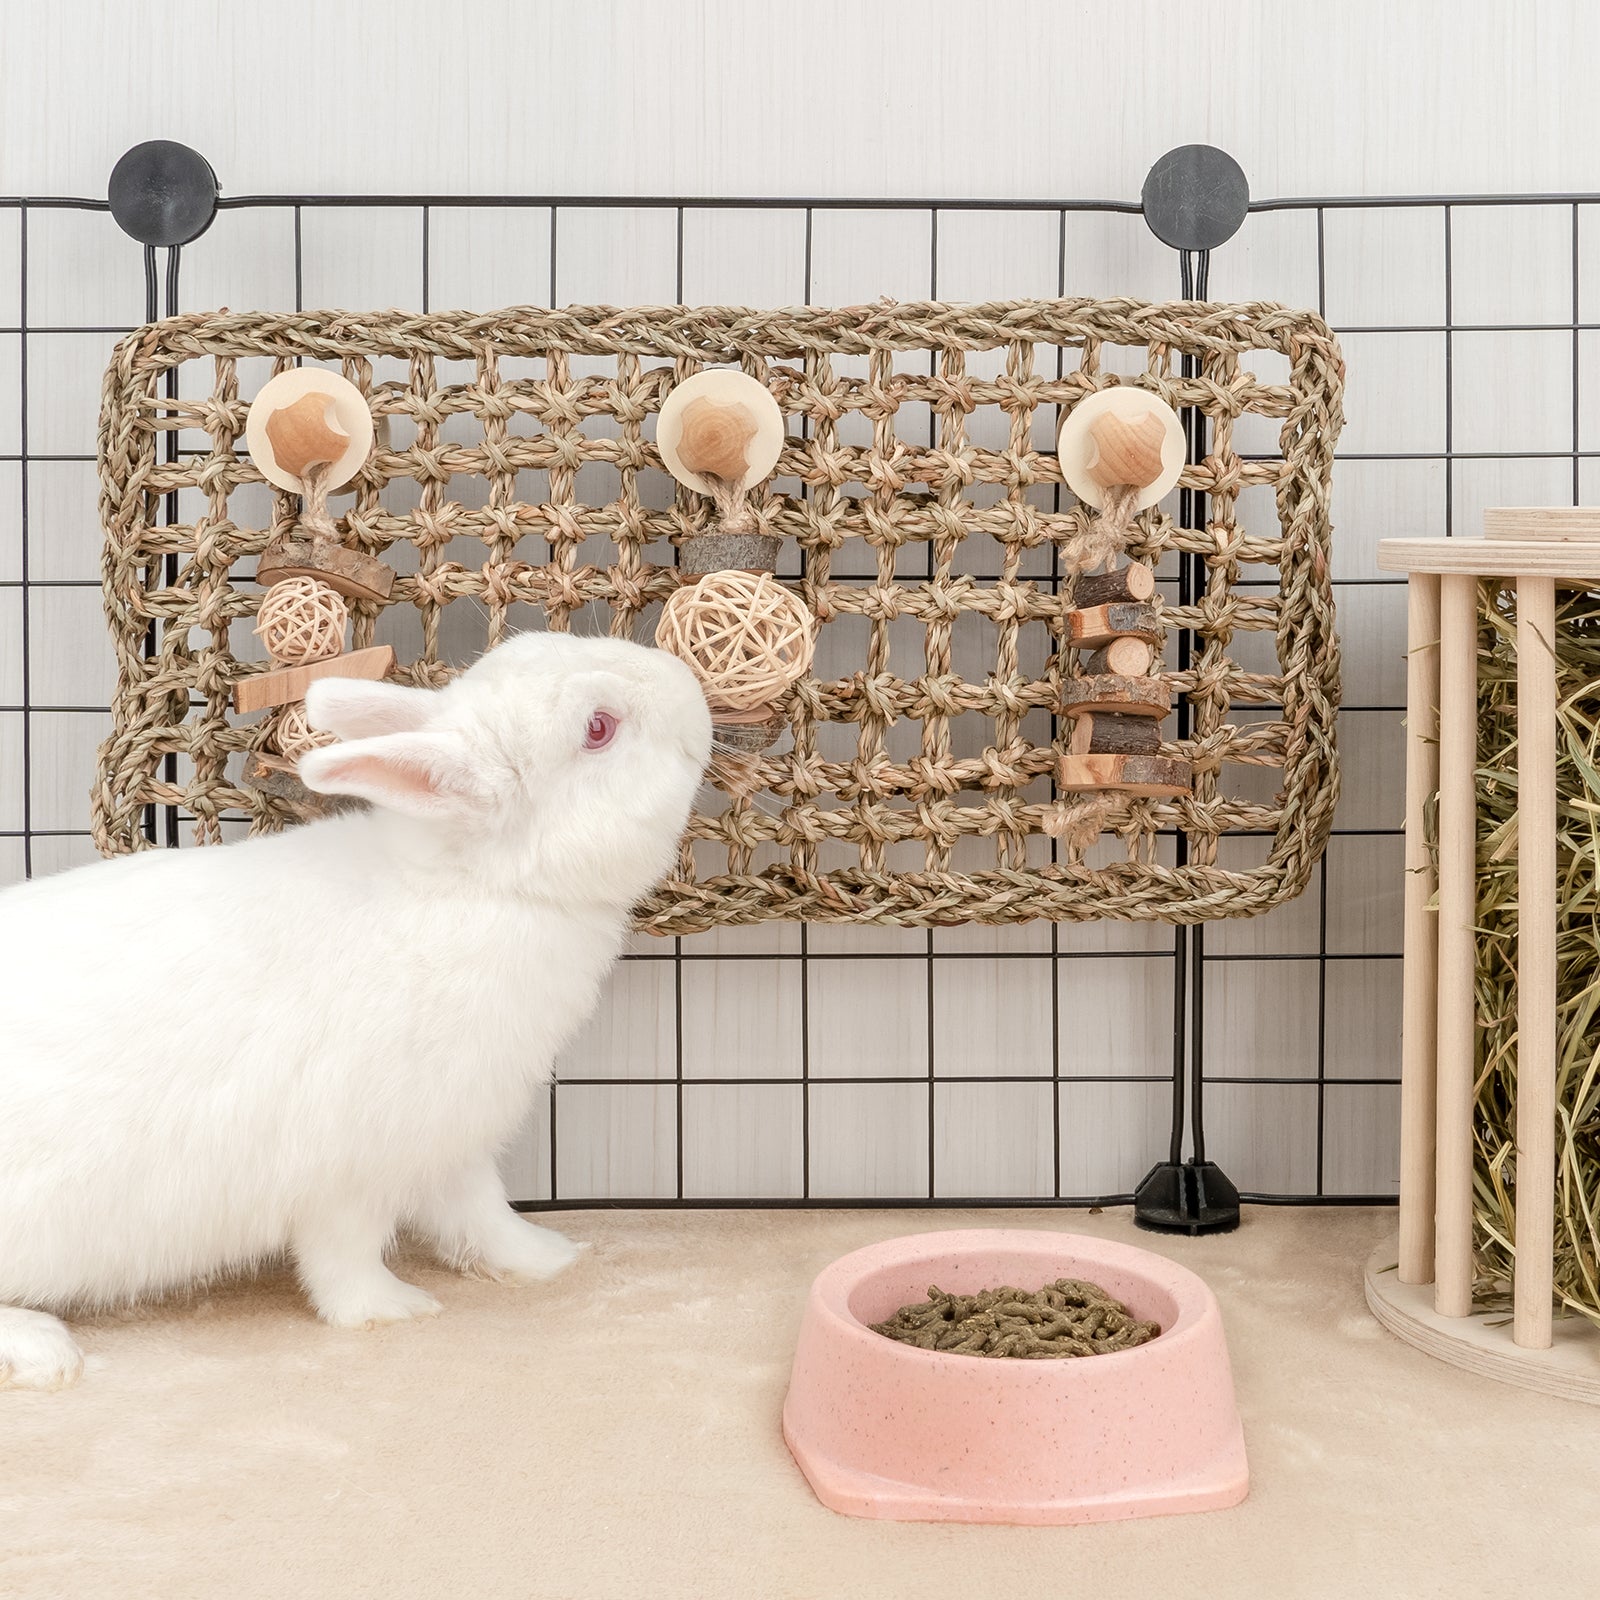 Niteangel艾特 兔子龍貓荷蘭豬籠內防護草墊蘋果木安全啃咬玩具